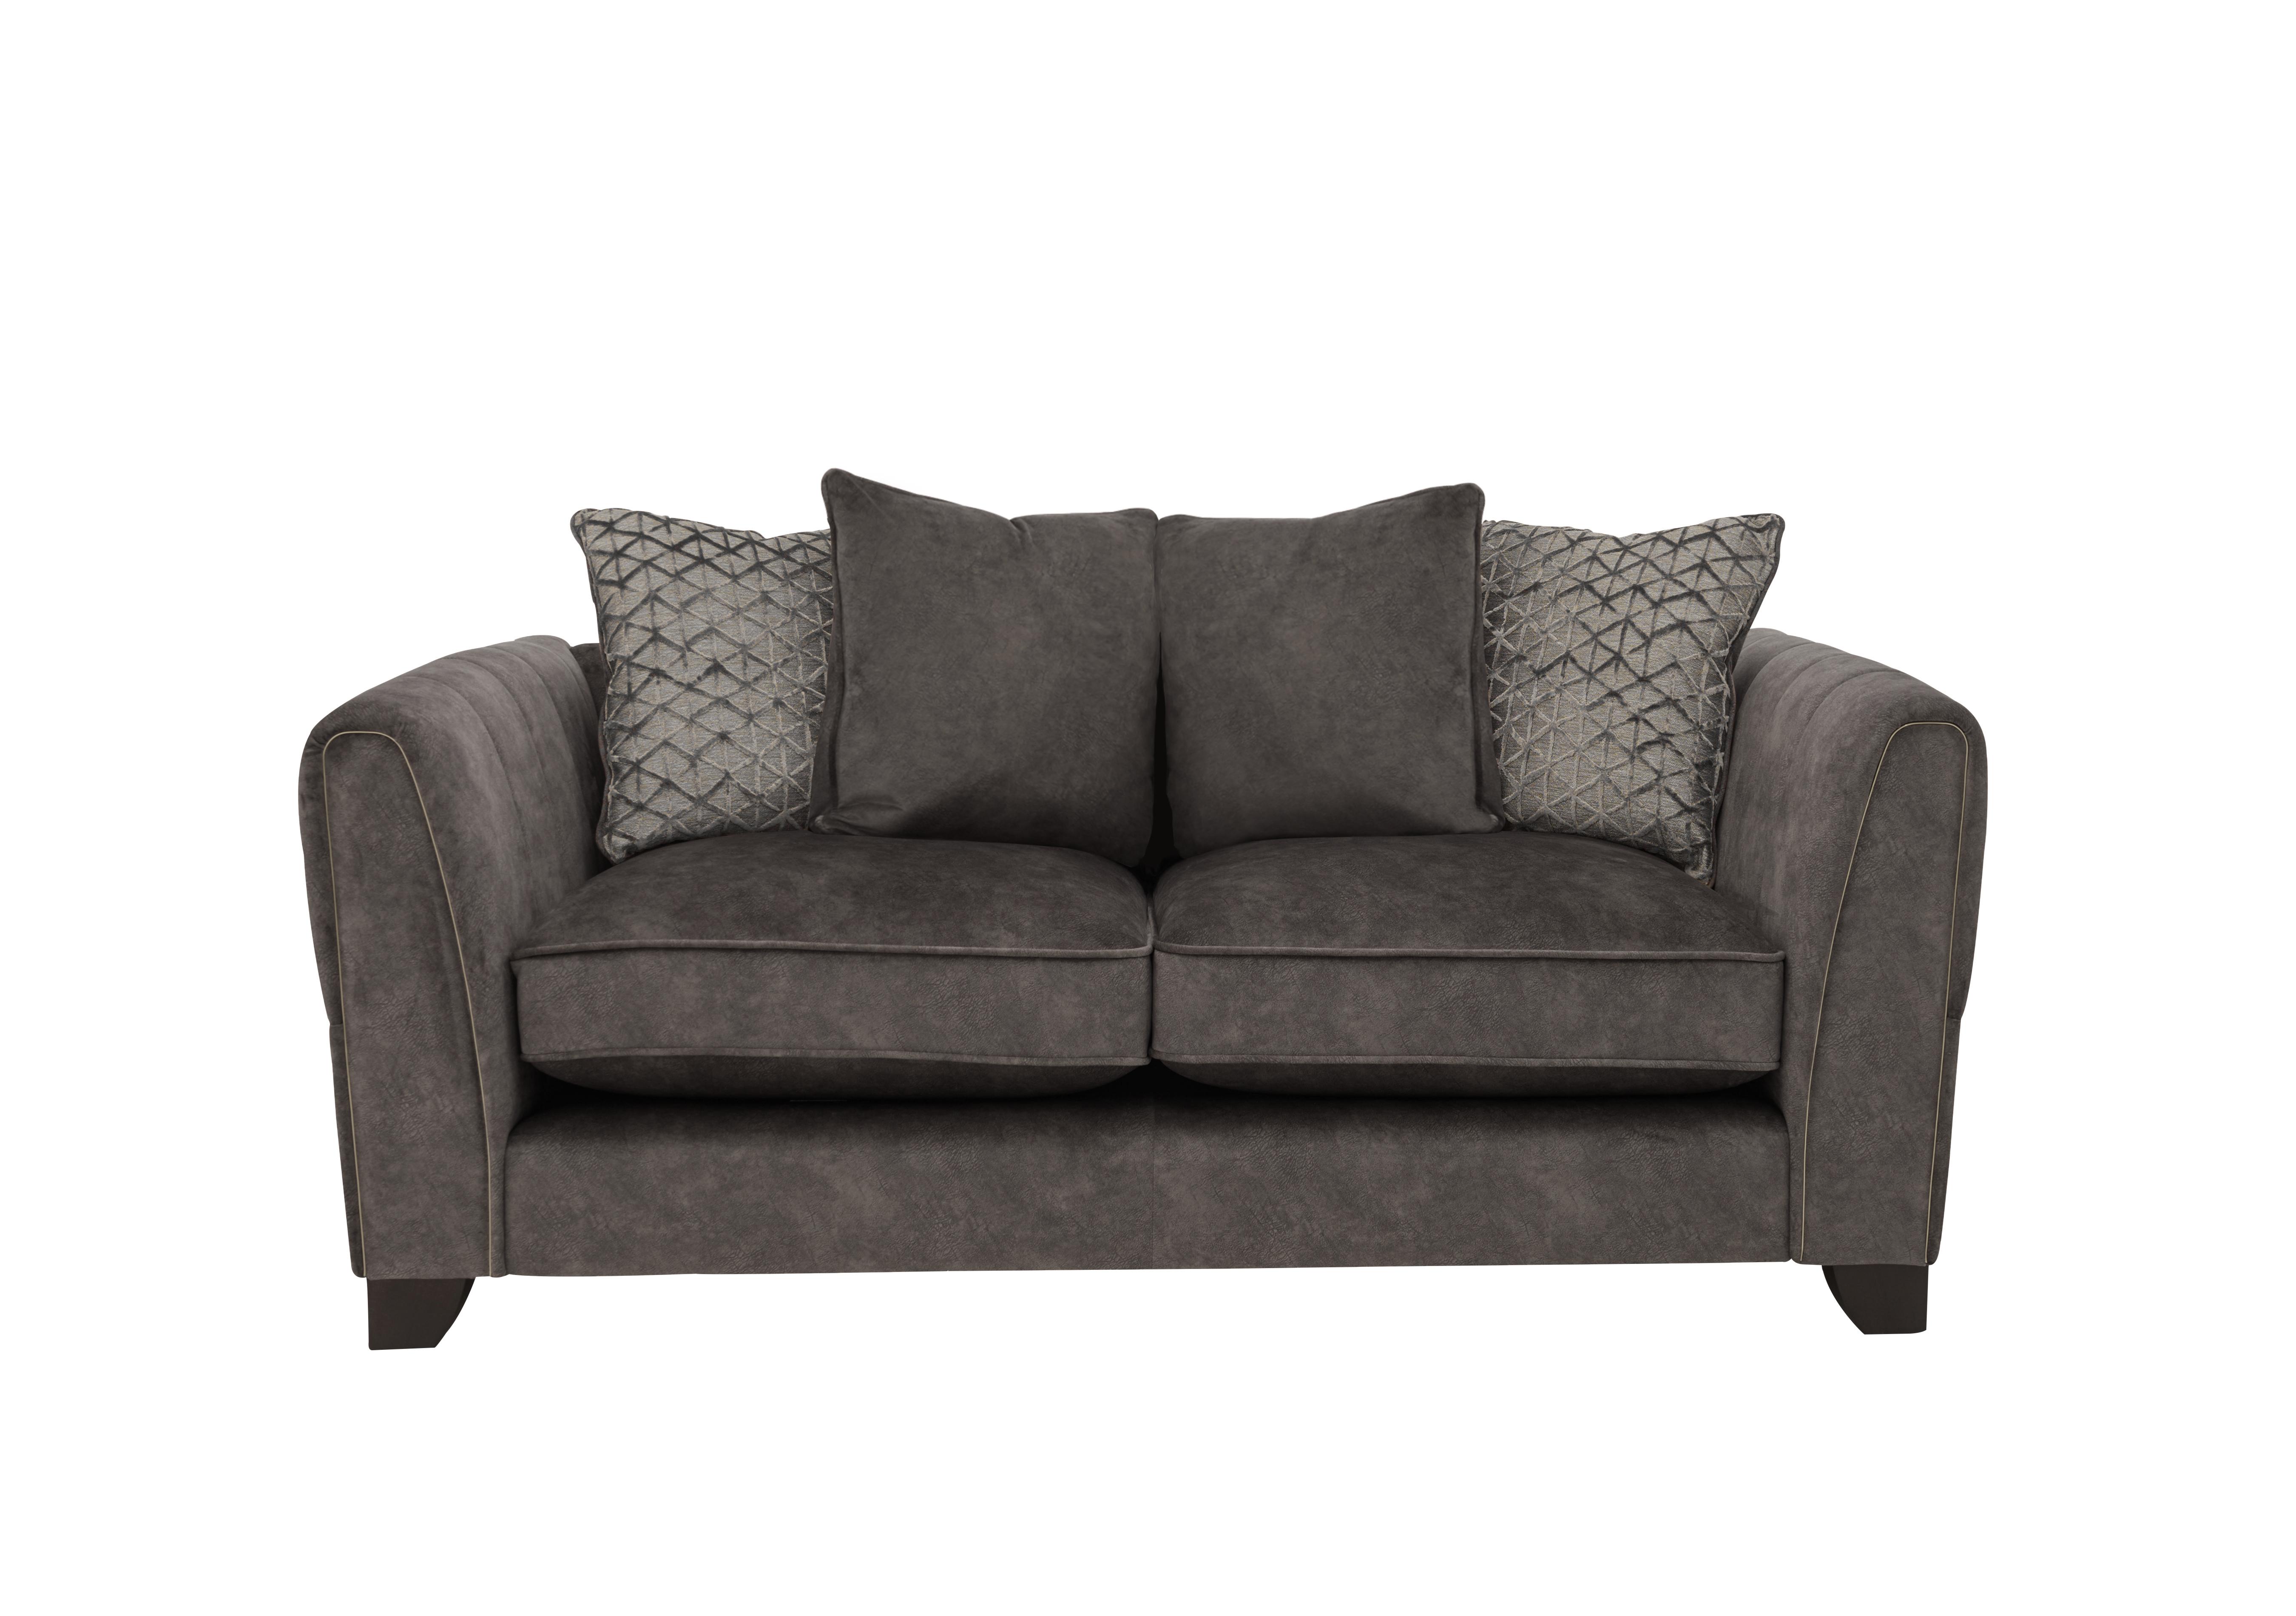 Ariana 2 Seater Fabric Pillow Back Sofa in Dapple Mink Brass Insert on Furniture Village